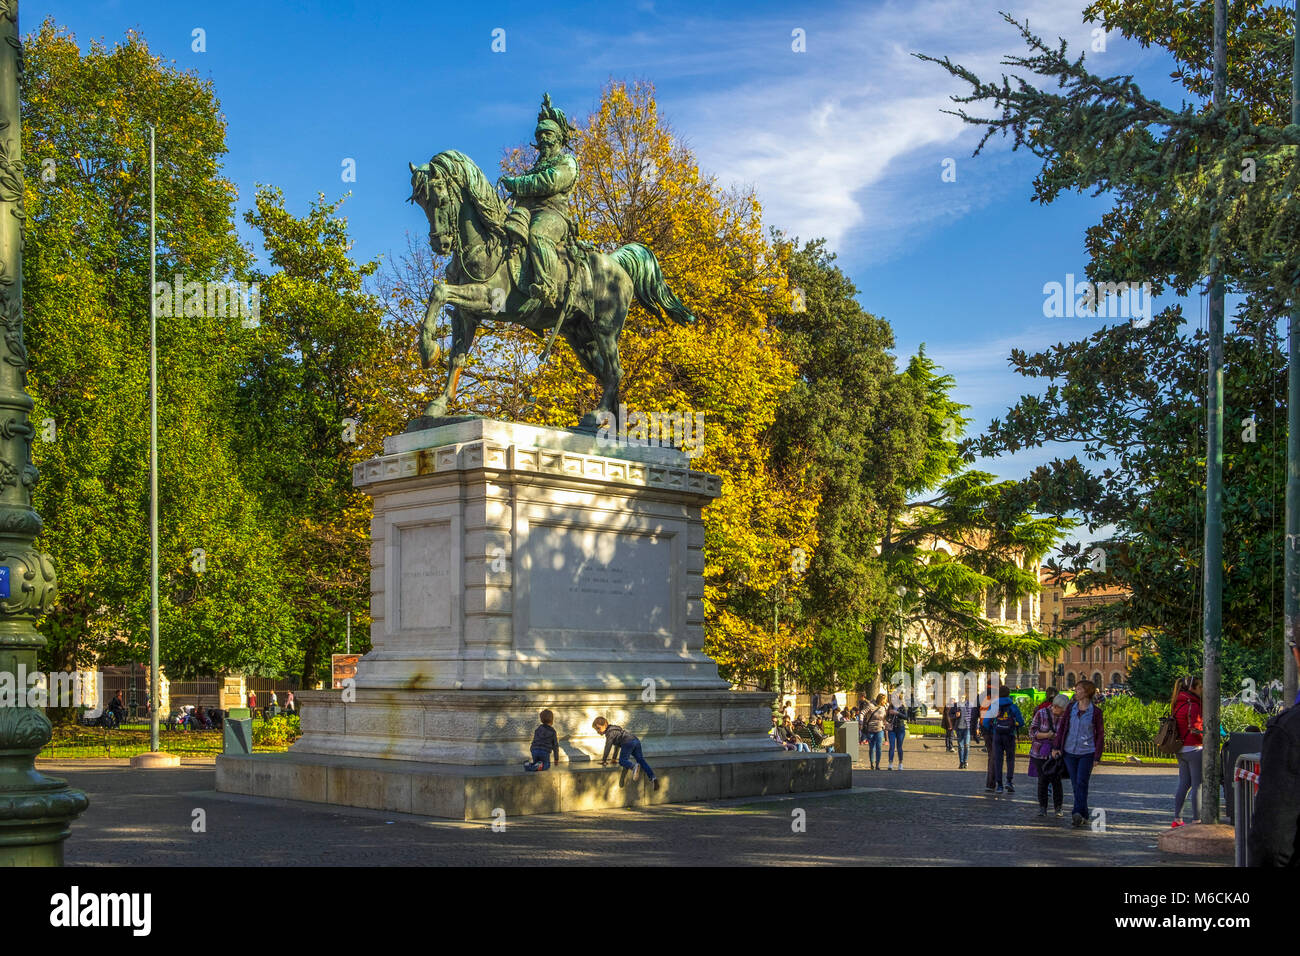 Statue of King Vittorio Emanuele II, (Victor Emmanuel) in Piazza Bra, Verona, Italy Stock Photo